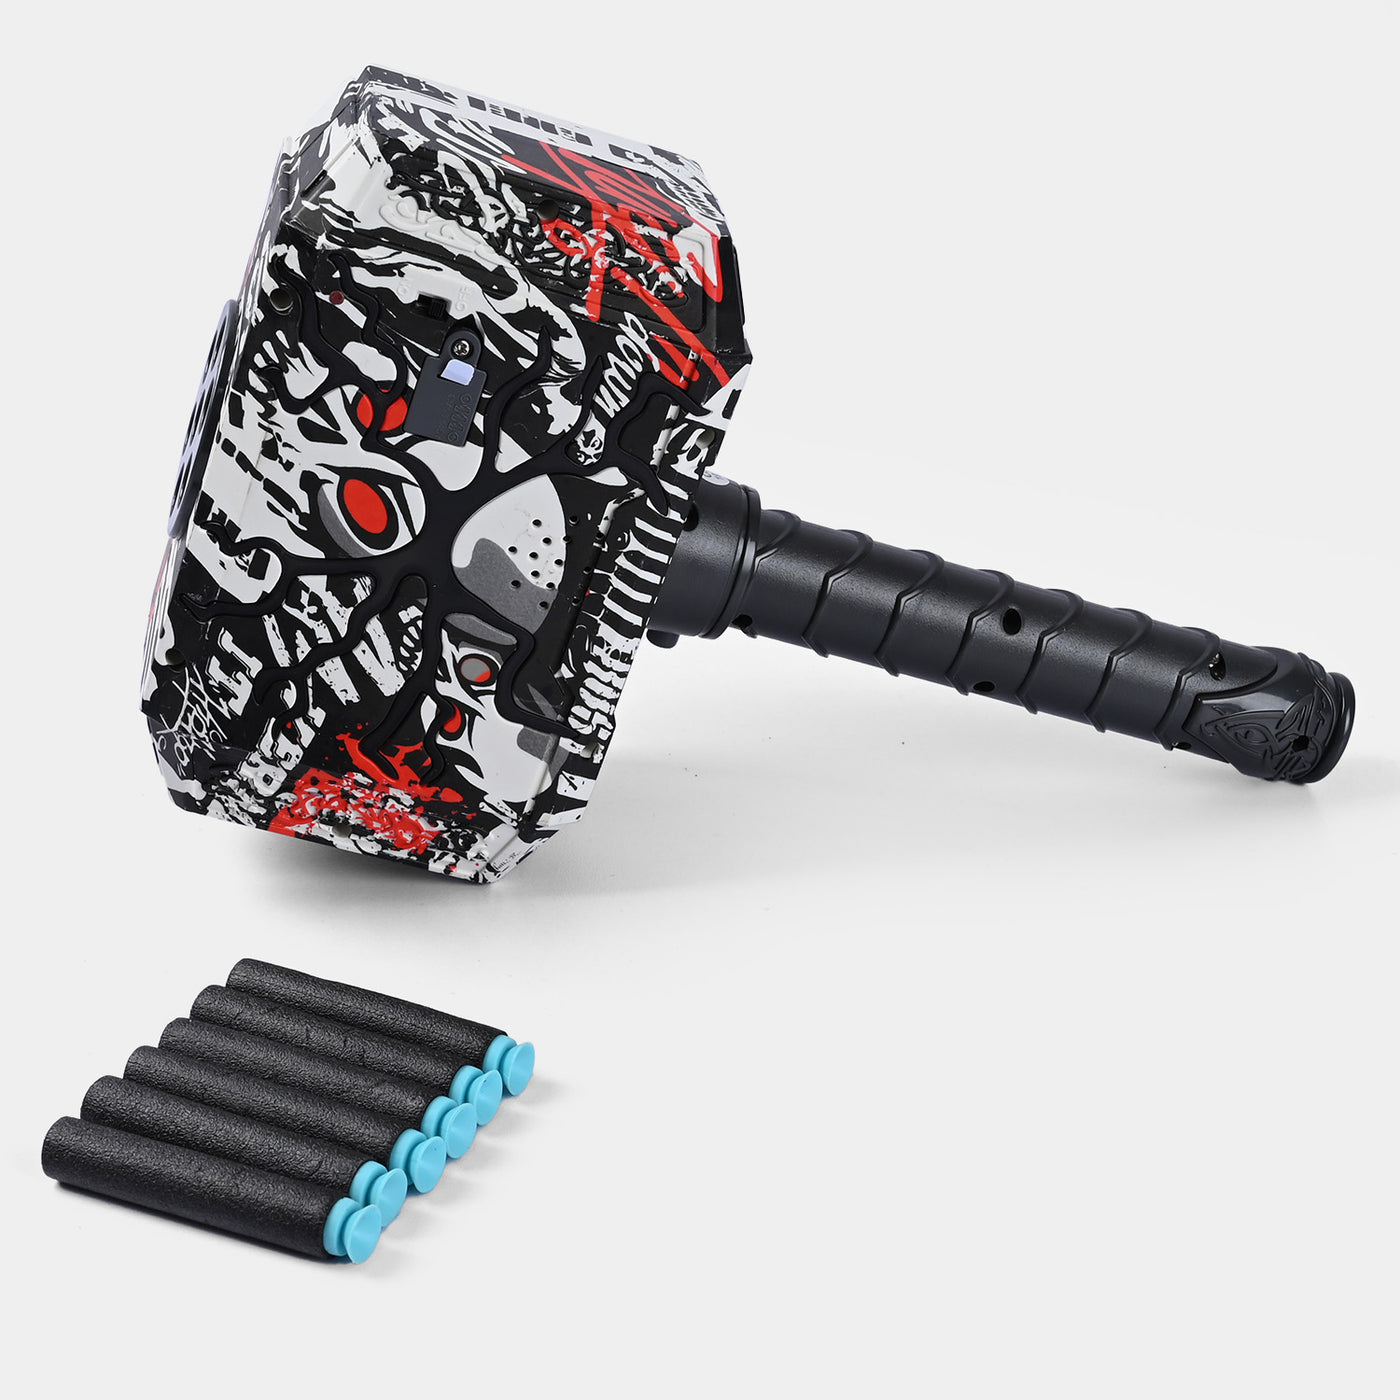 Hammer Shape Blaster Soft Dart Target Toy For Kids